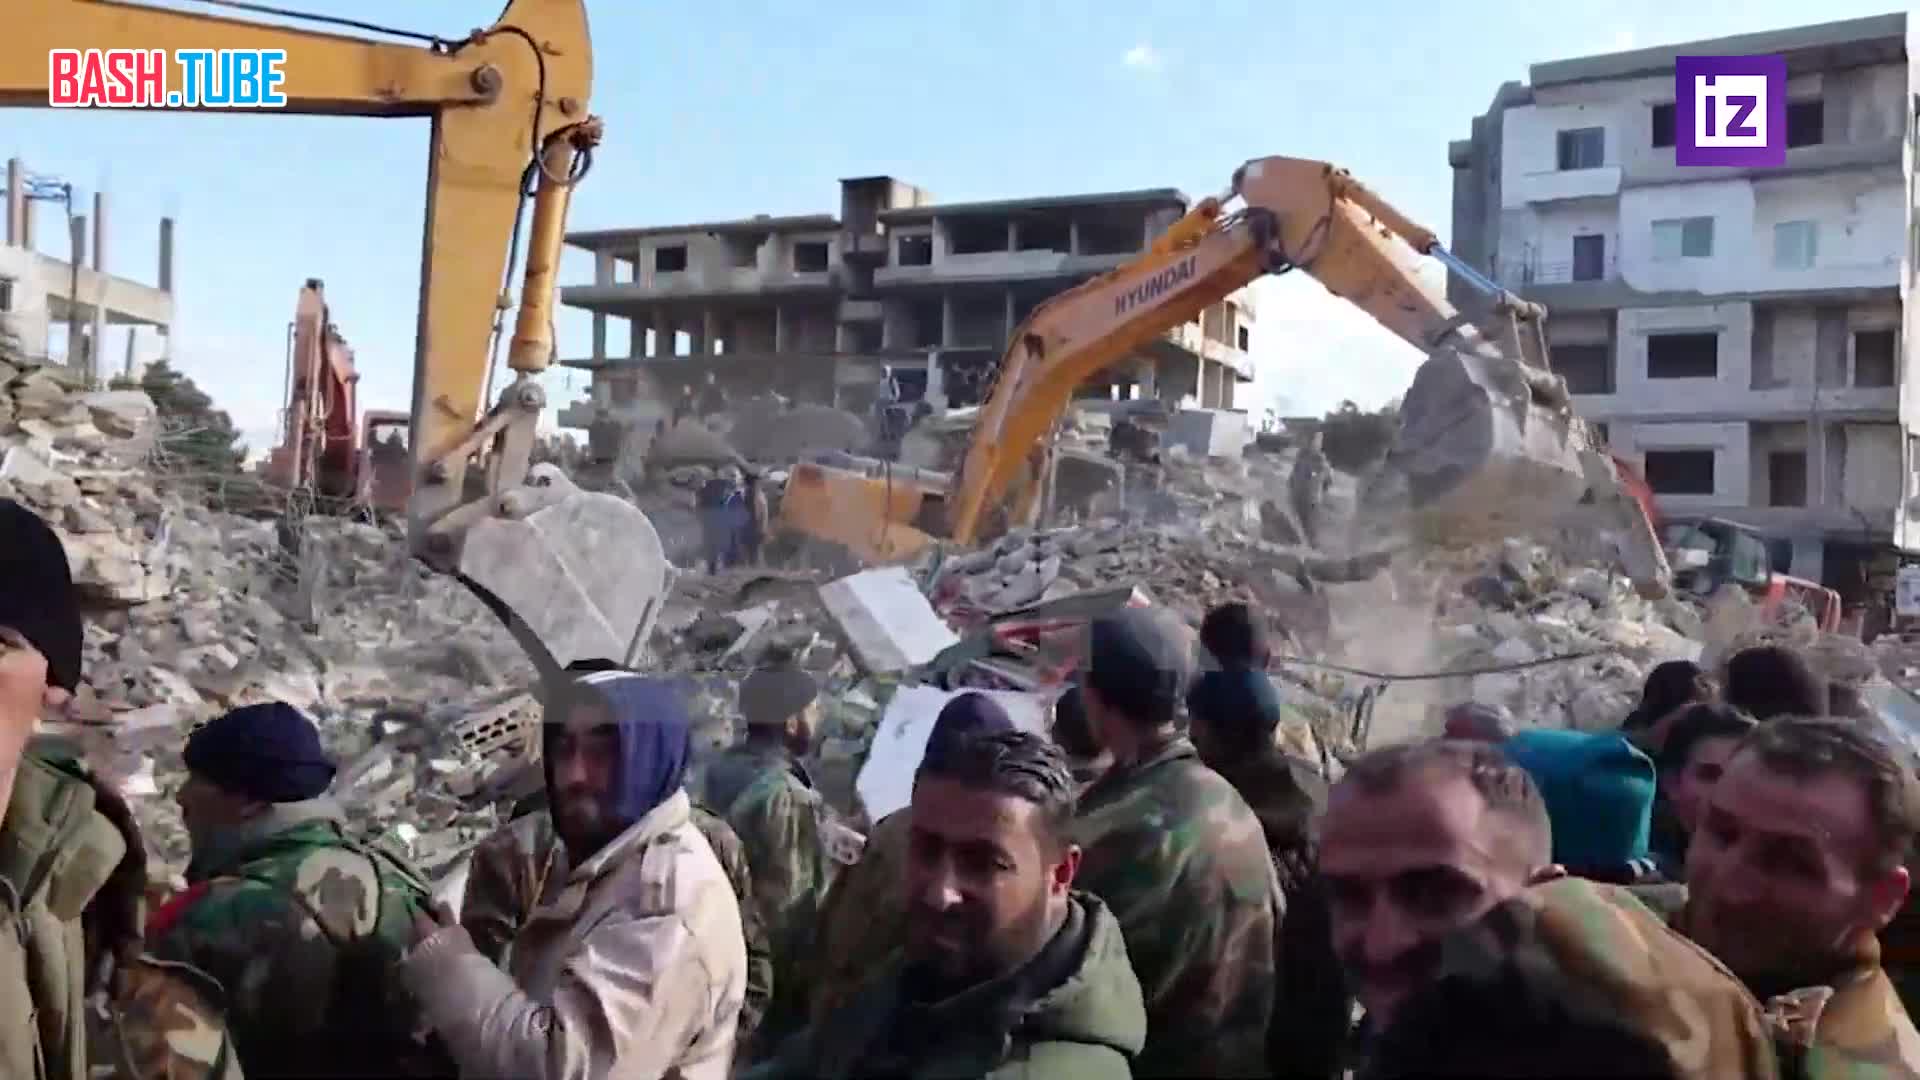  В сирийском городе Джебла сотрудники МЧС РФ устраняют последствия землетрясения